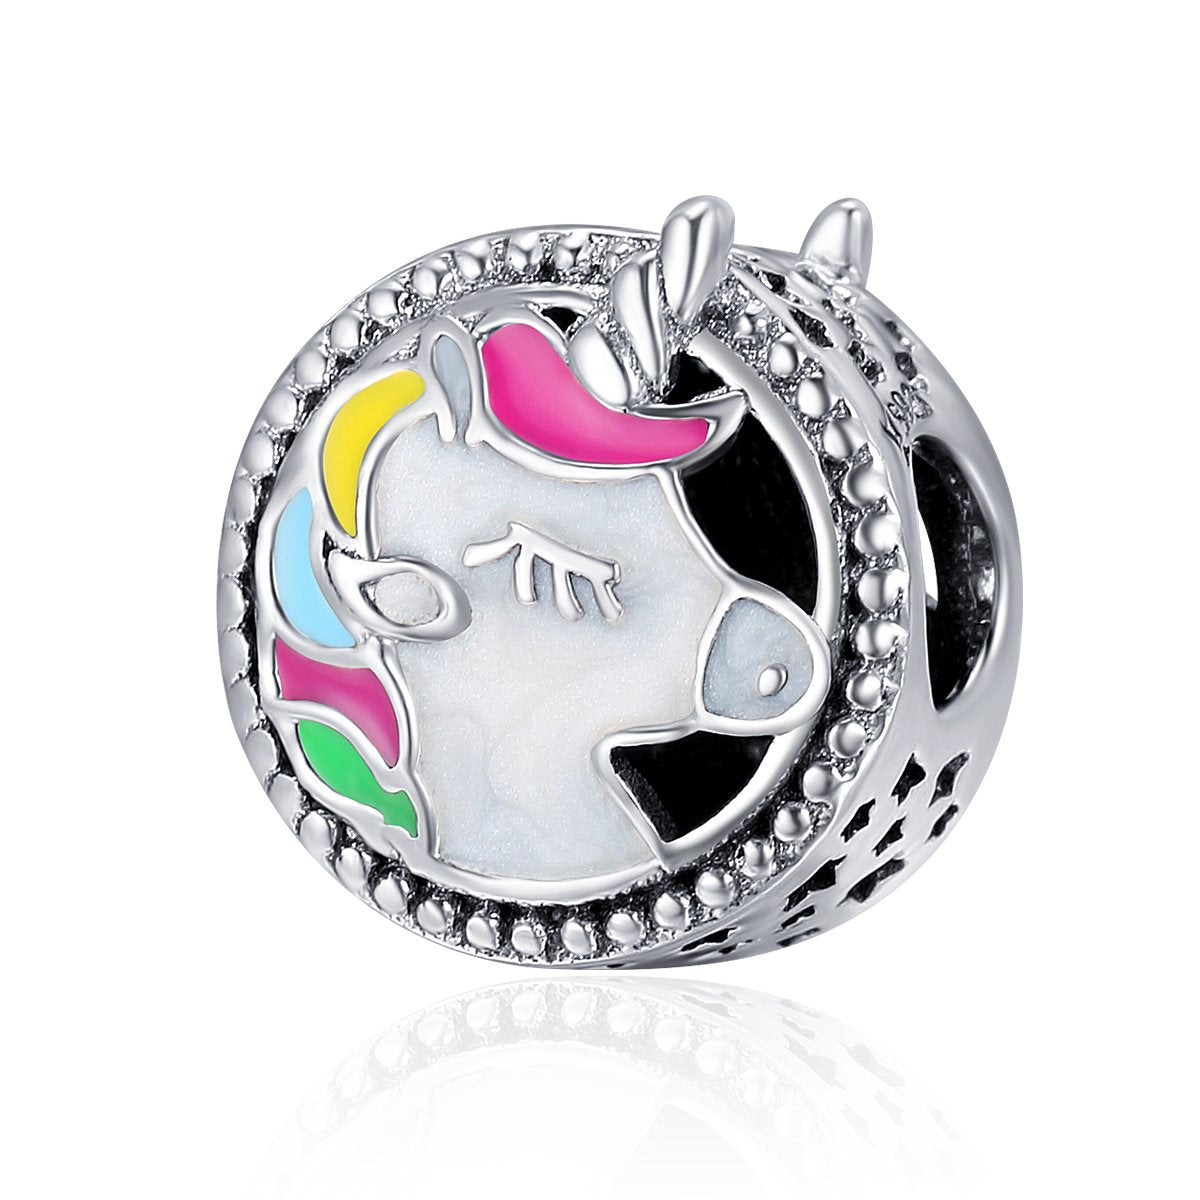 Sterling 925 silver charm the pony bead pendant fits Pandora charm and European charm bracelet Xaxe.com